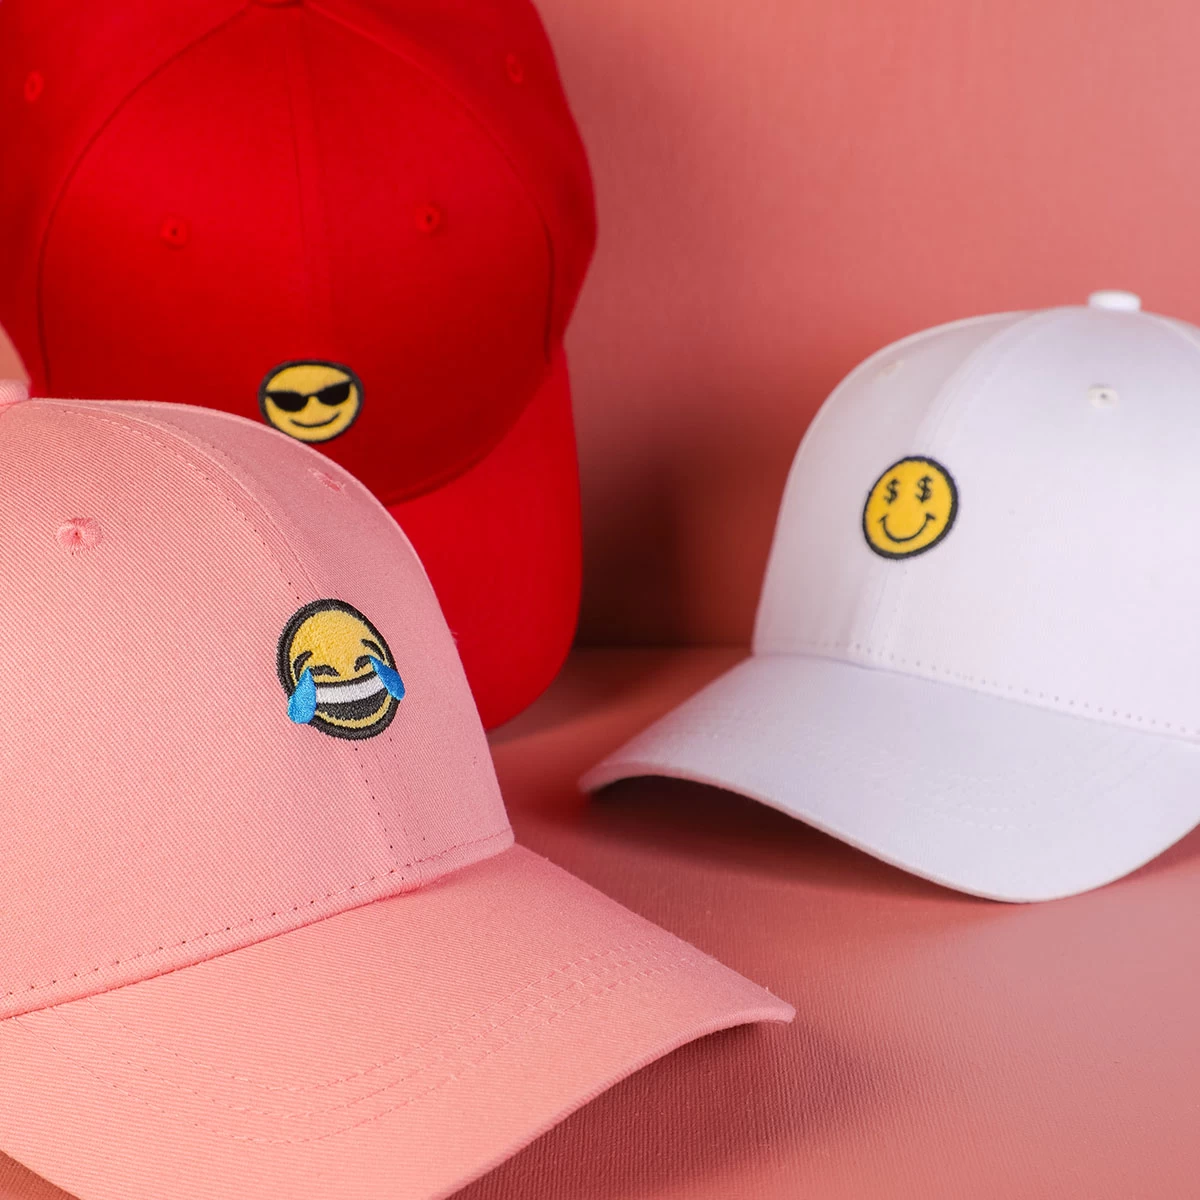 plain smiley face emoji embroidery logo baseball hats custom